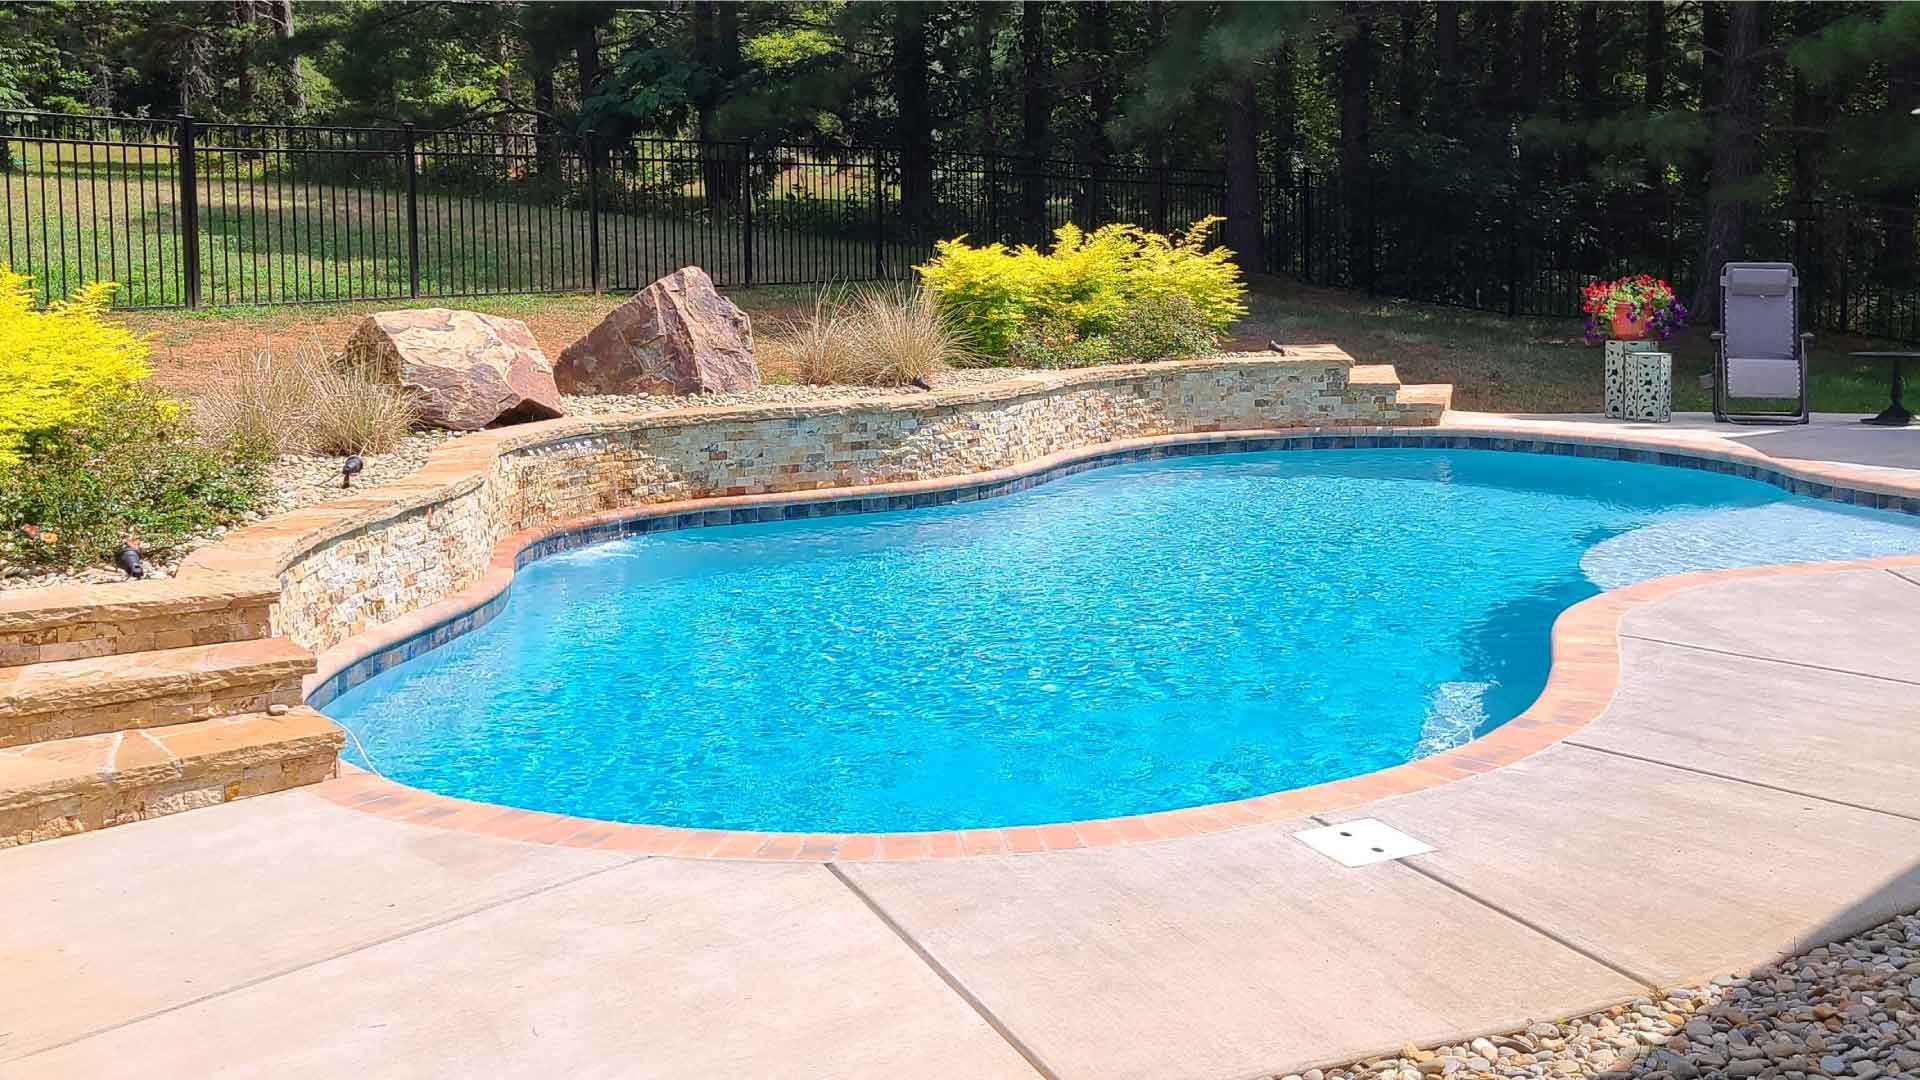 Raised bond beam | Pool patio, Backyard pool designs, Backyard pool